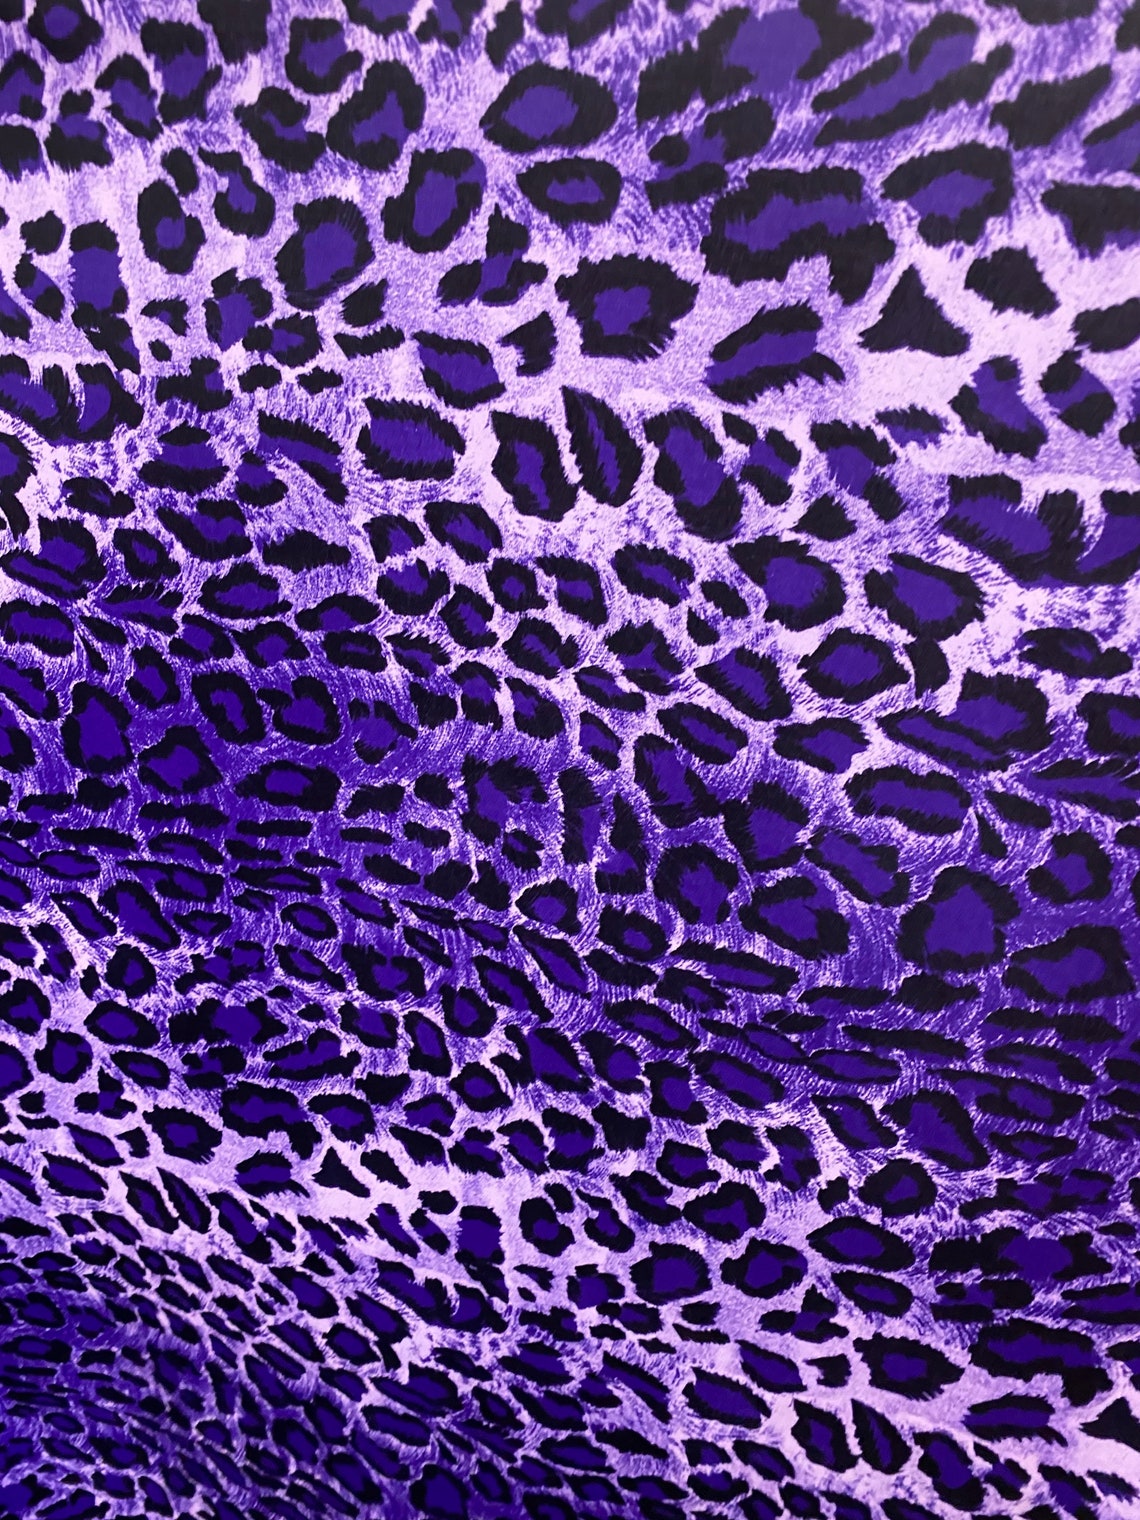 Exotic leopard design purple/black print on nylon spandex | Etsy